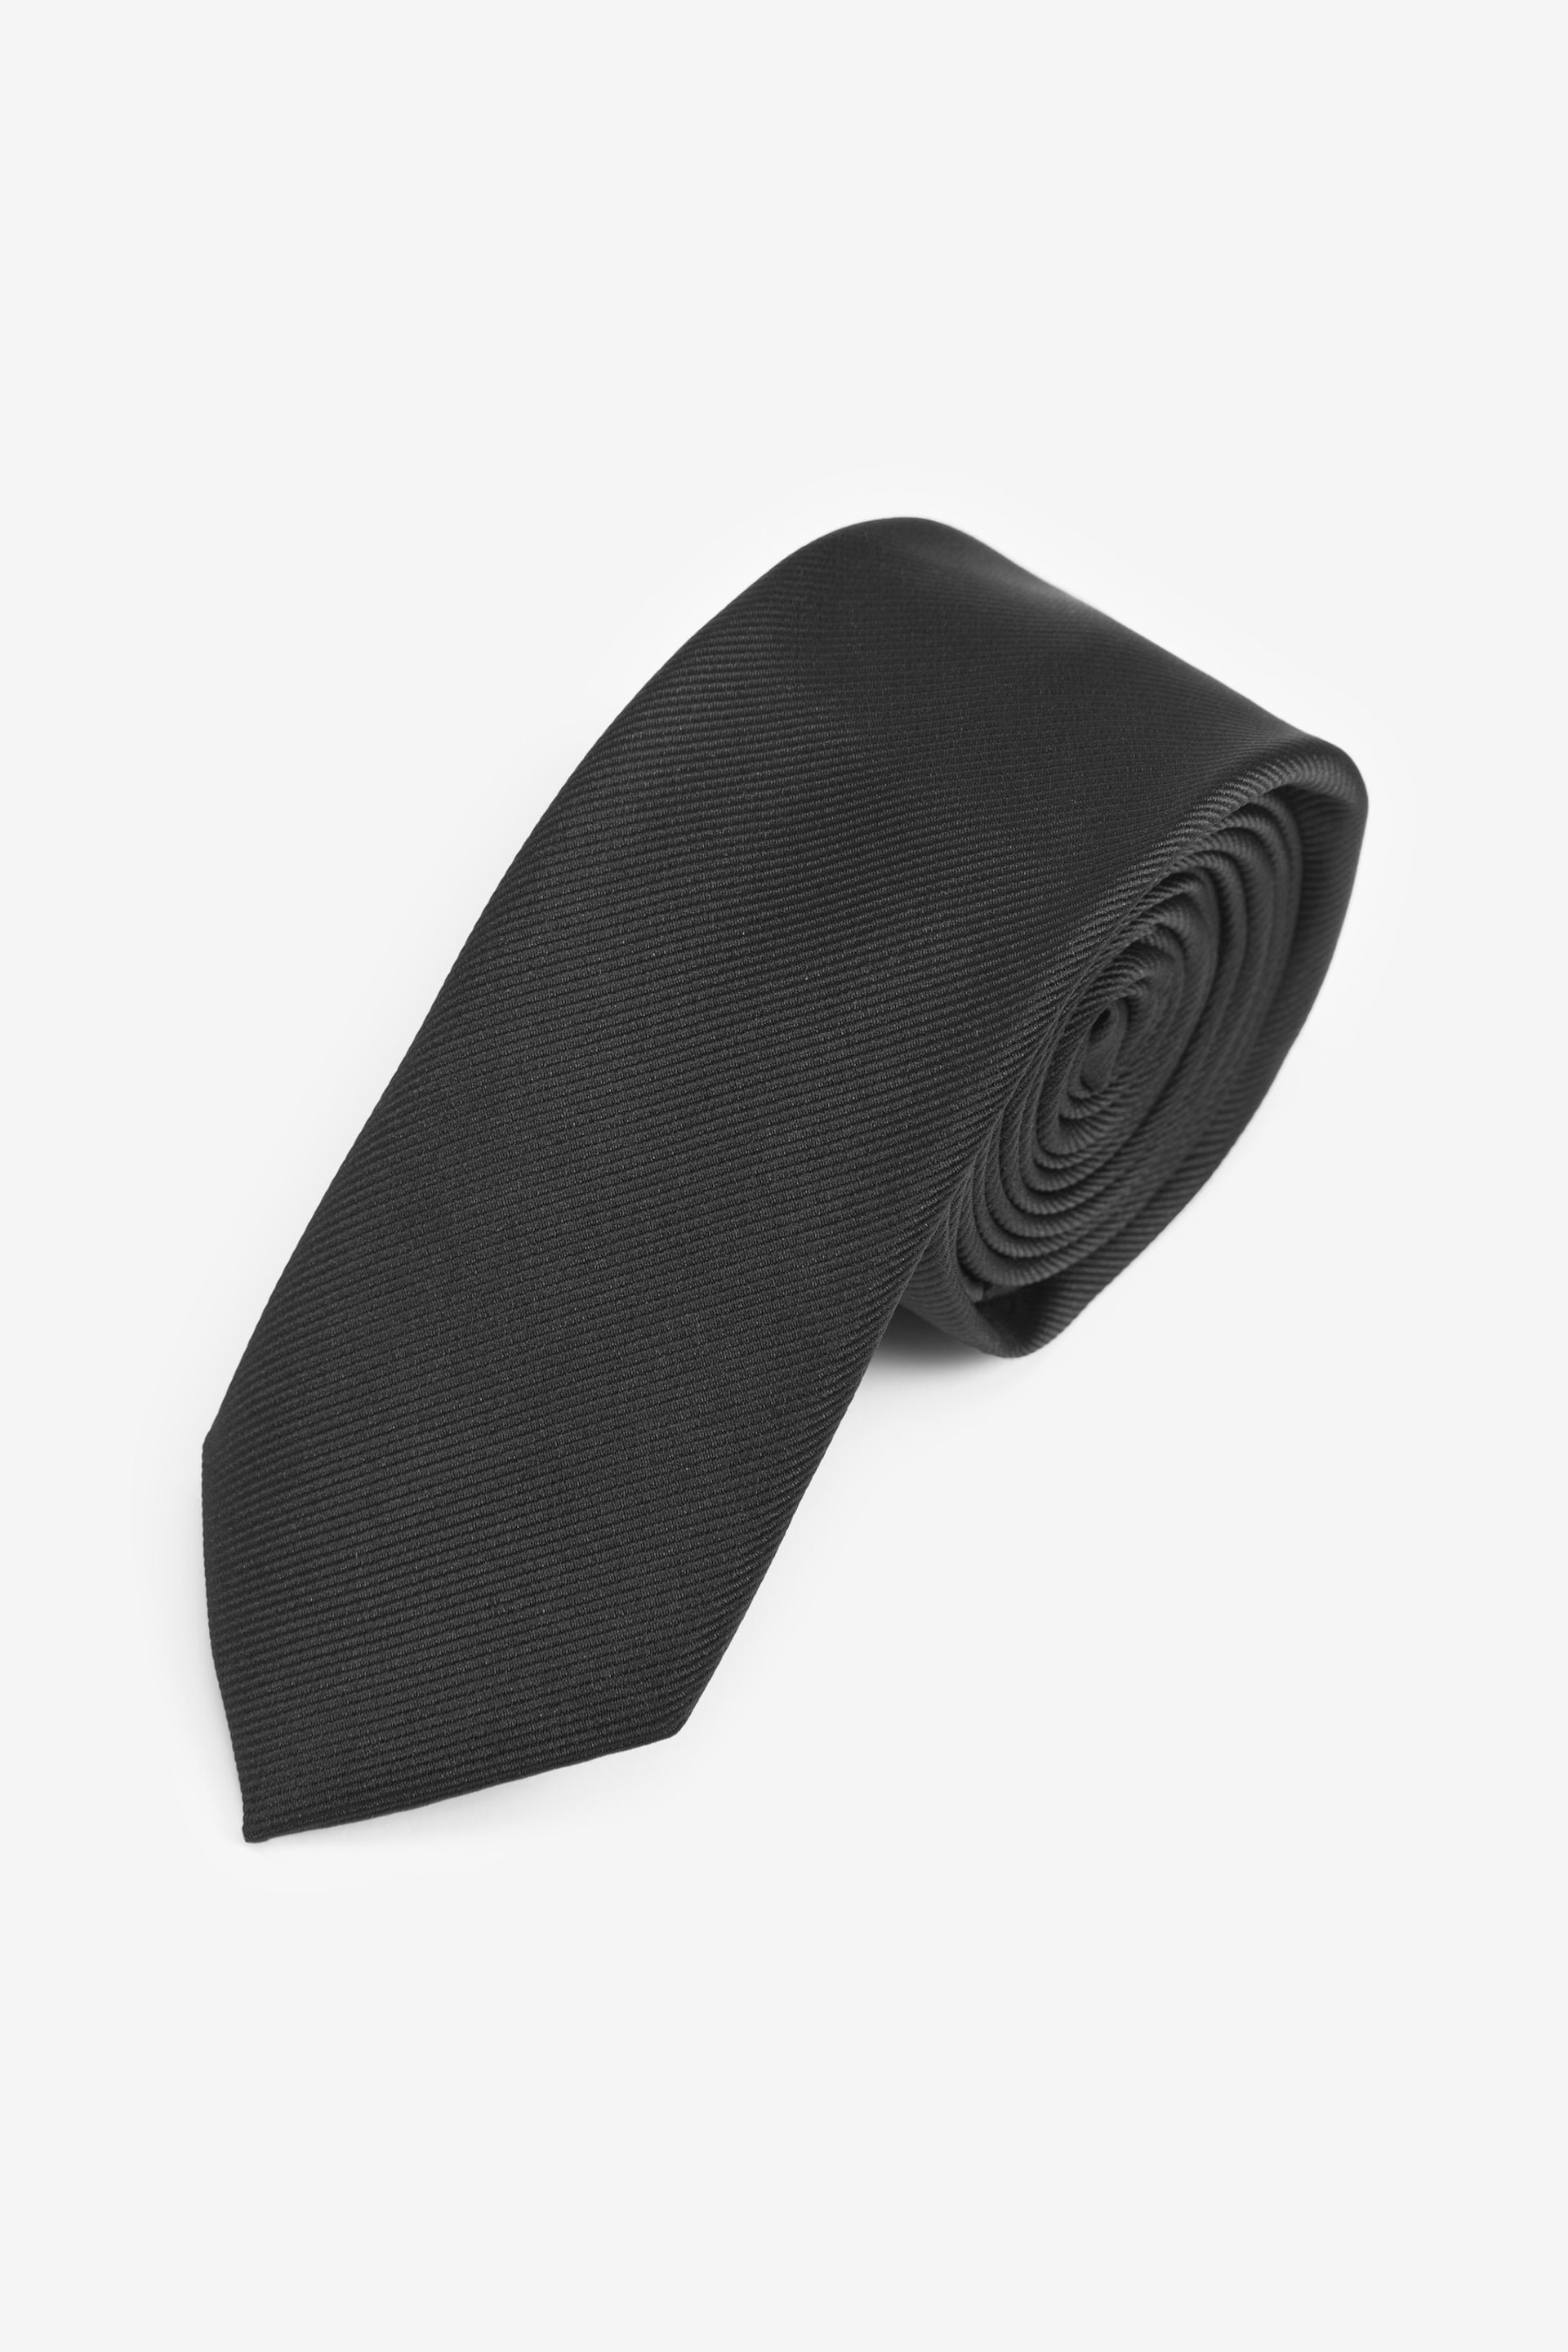 Black Slim Twill Tie - Image 1 of 3